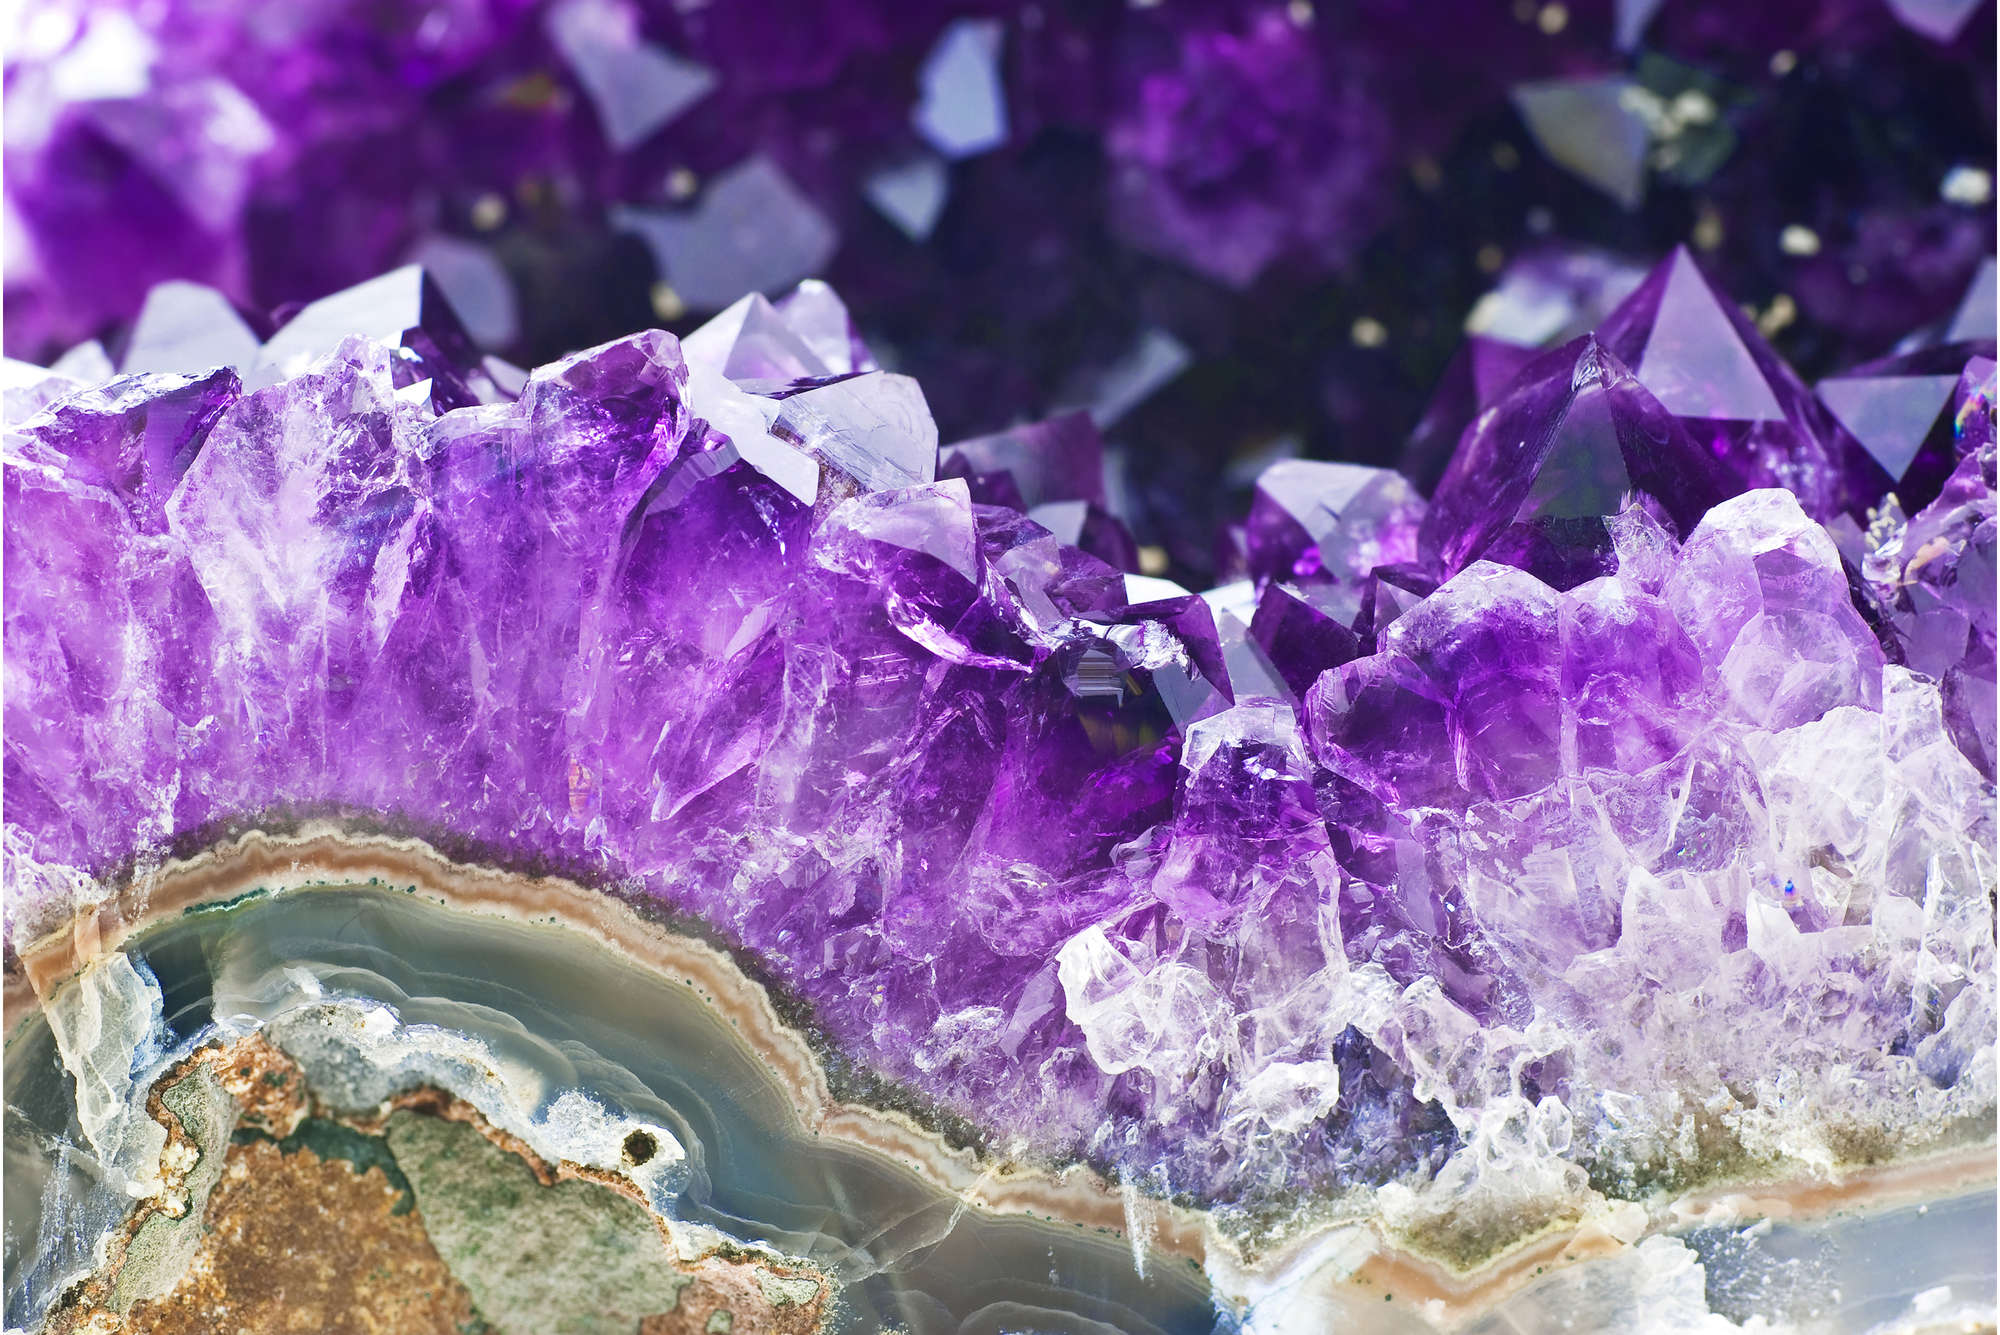             Fototapete Amethyst und Kristalle in Lila – Perlmutt Glattvlies
        